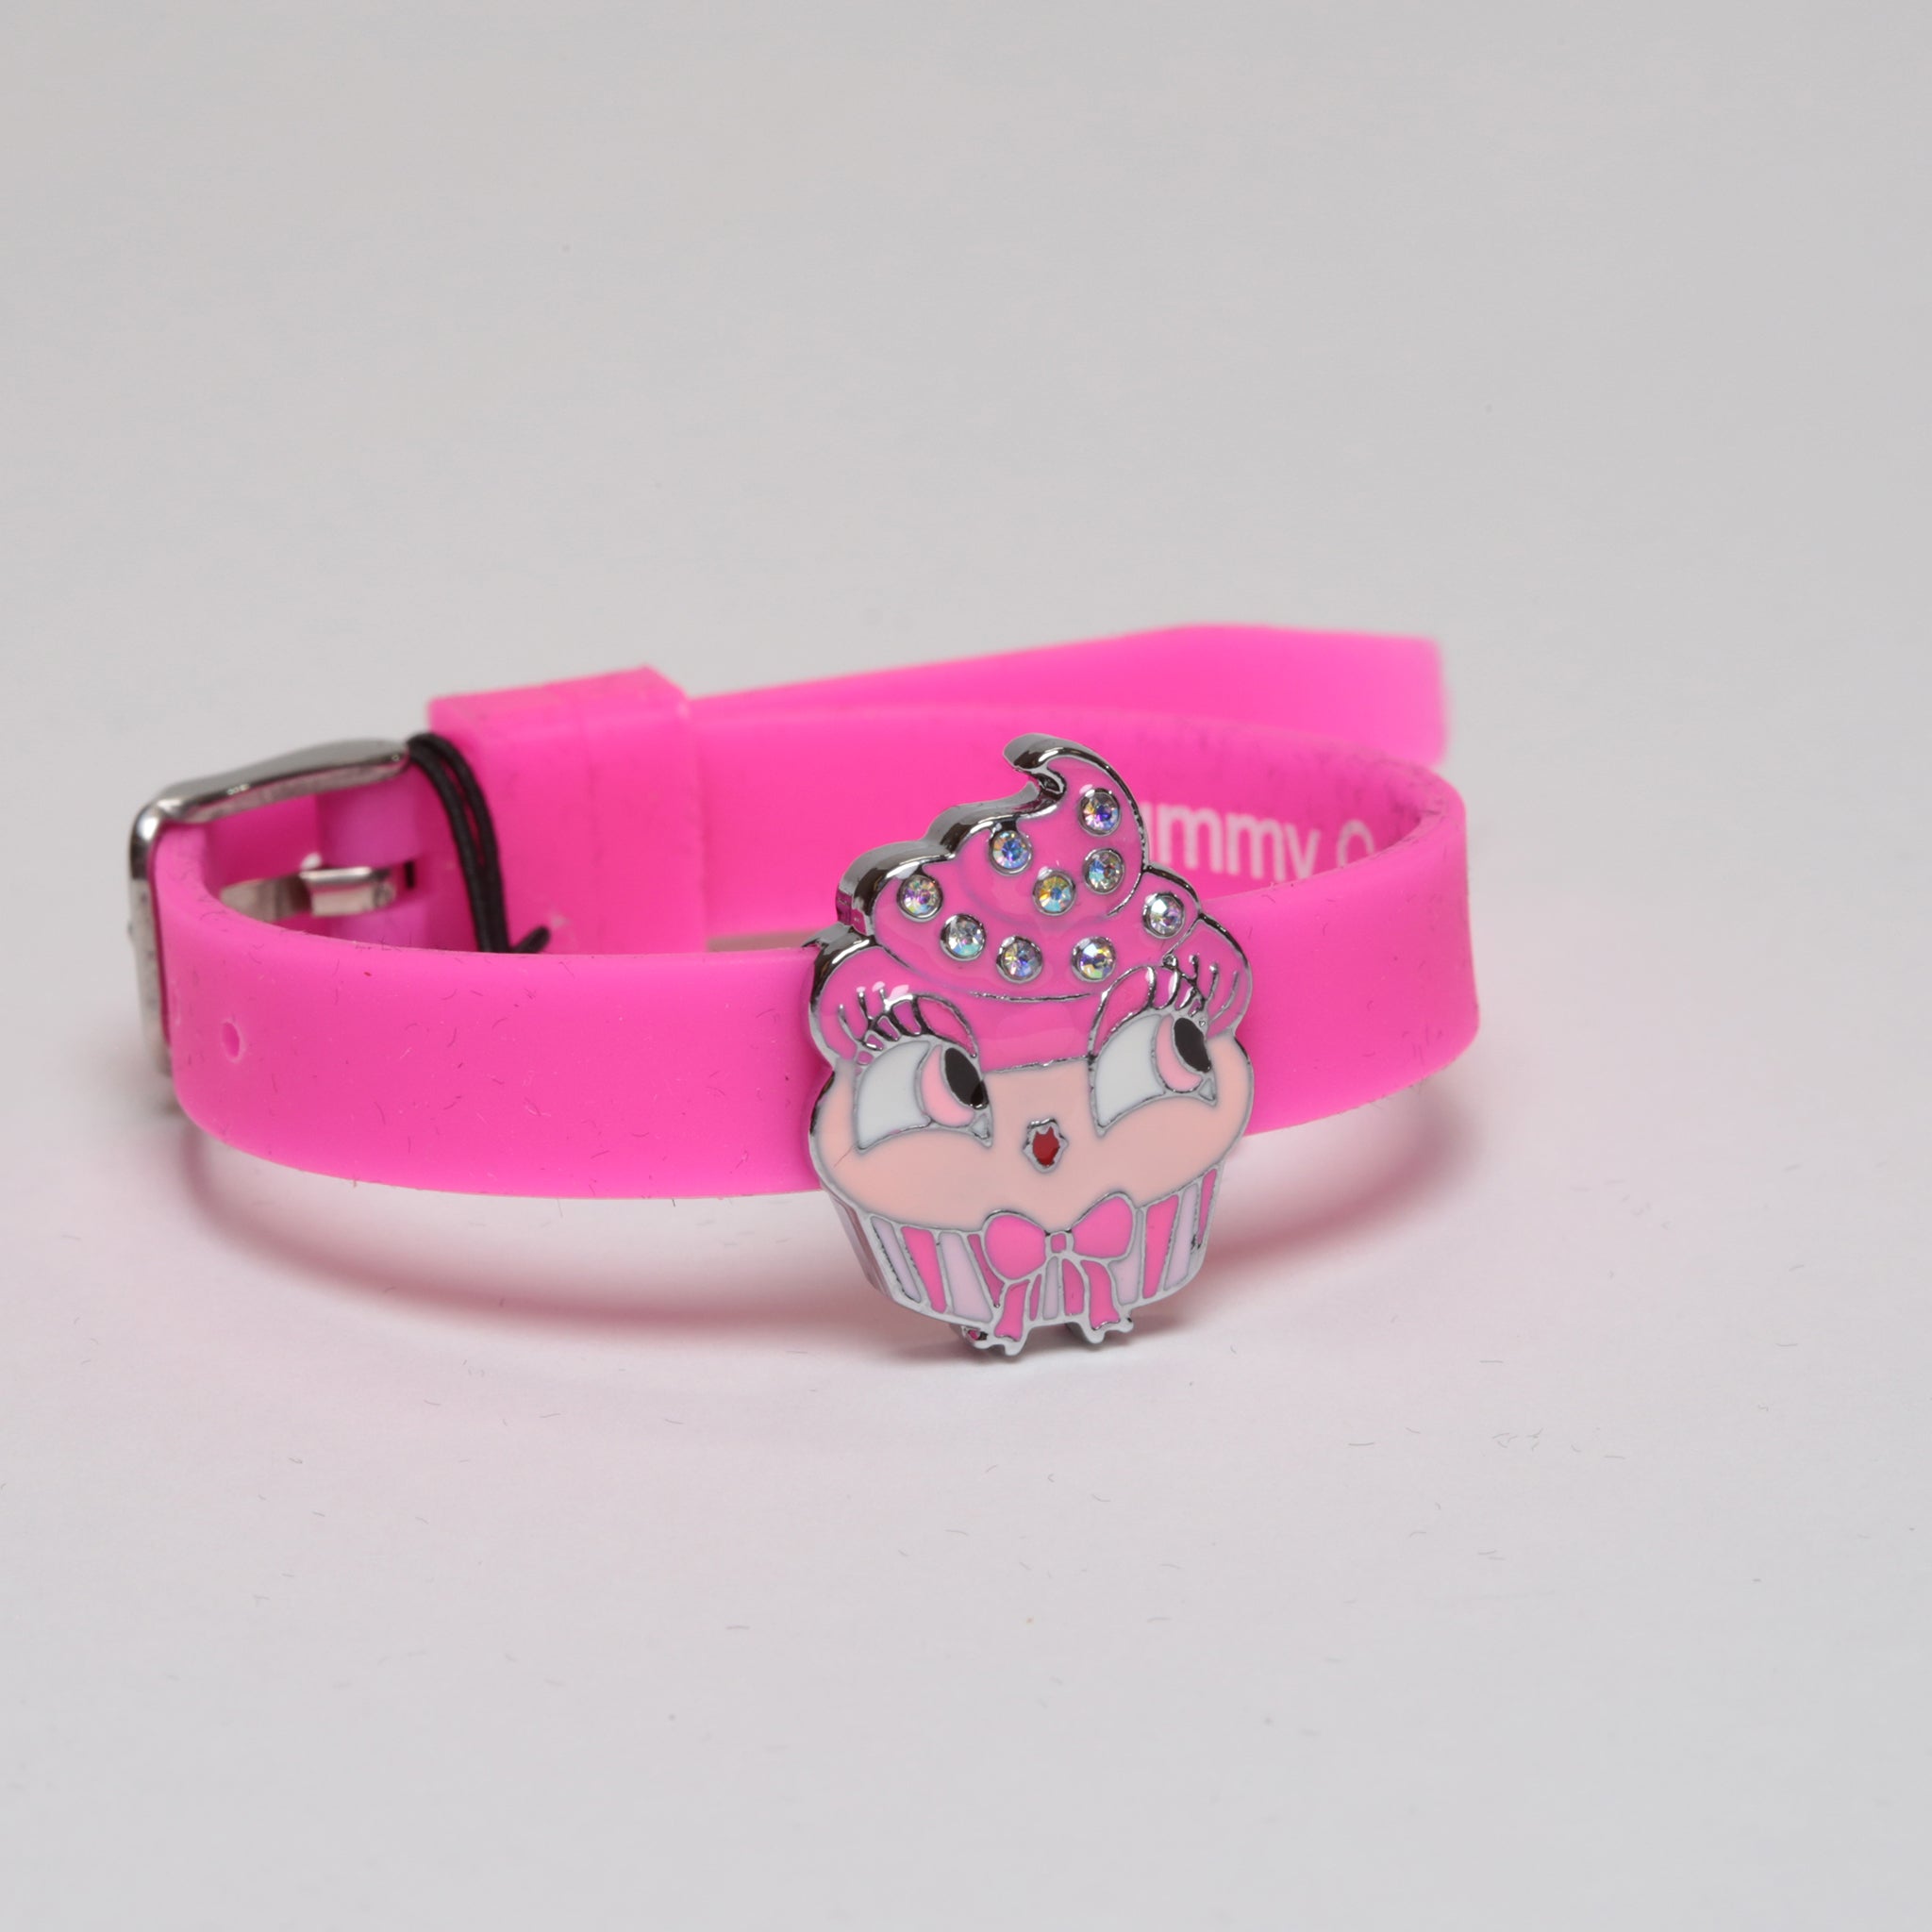 Embellished Cupcake Charm Bracelet